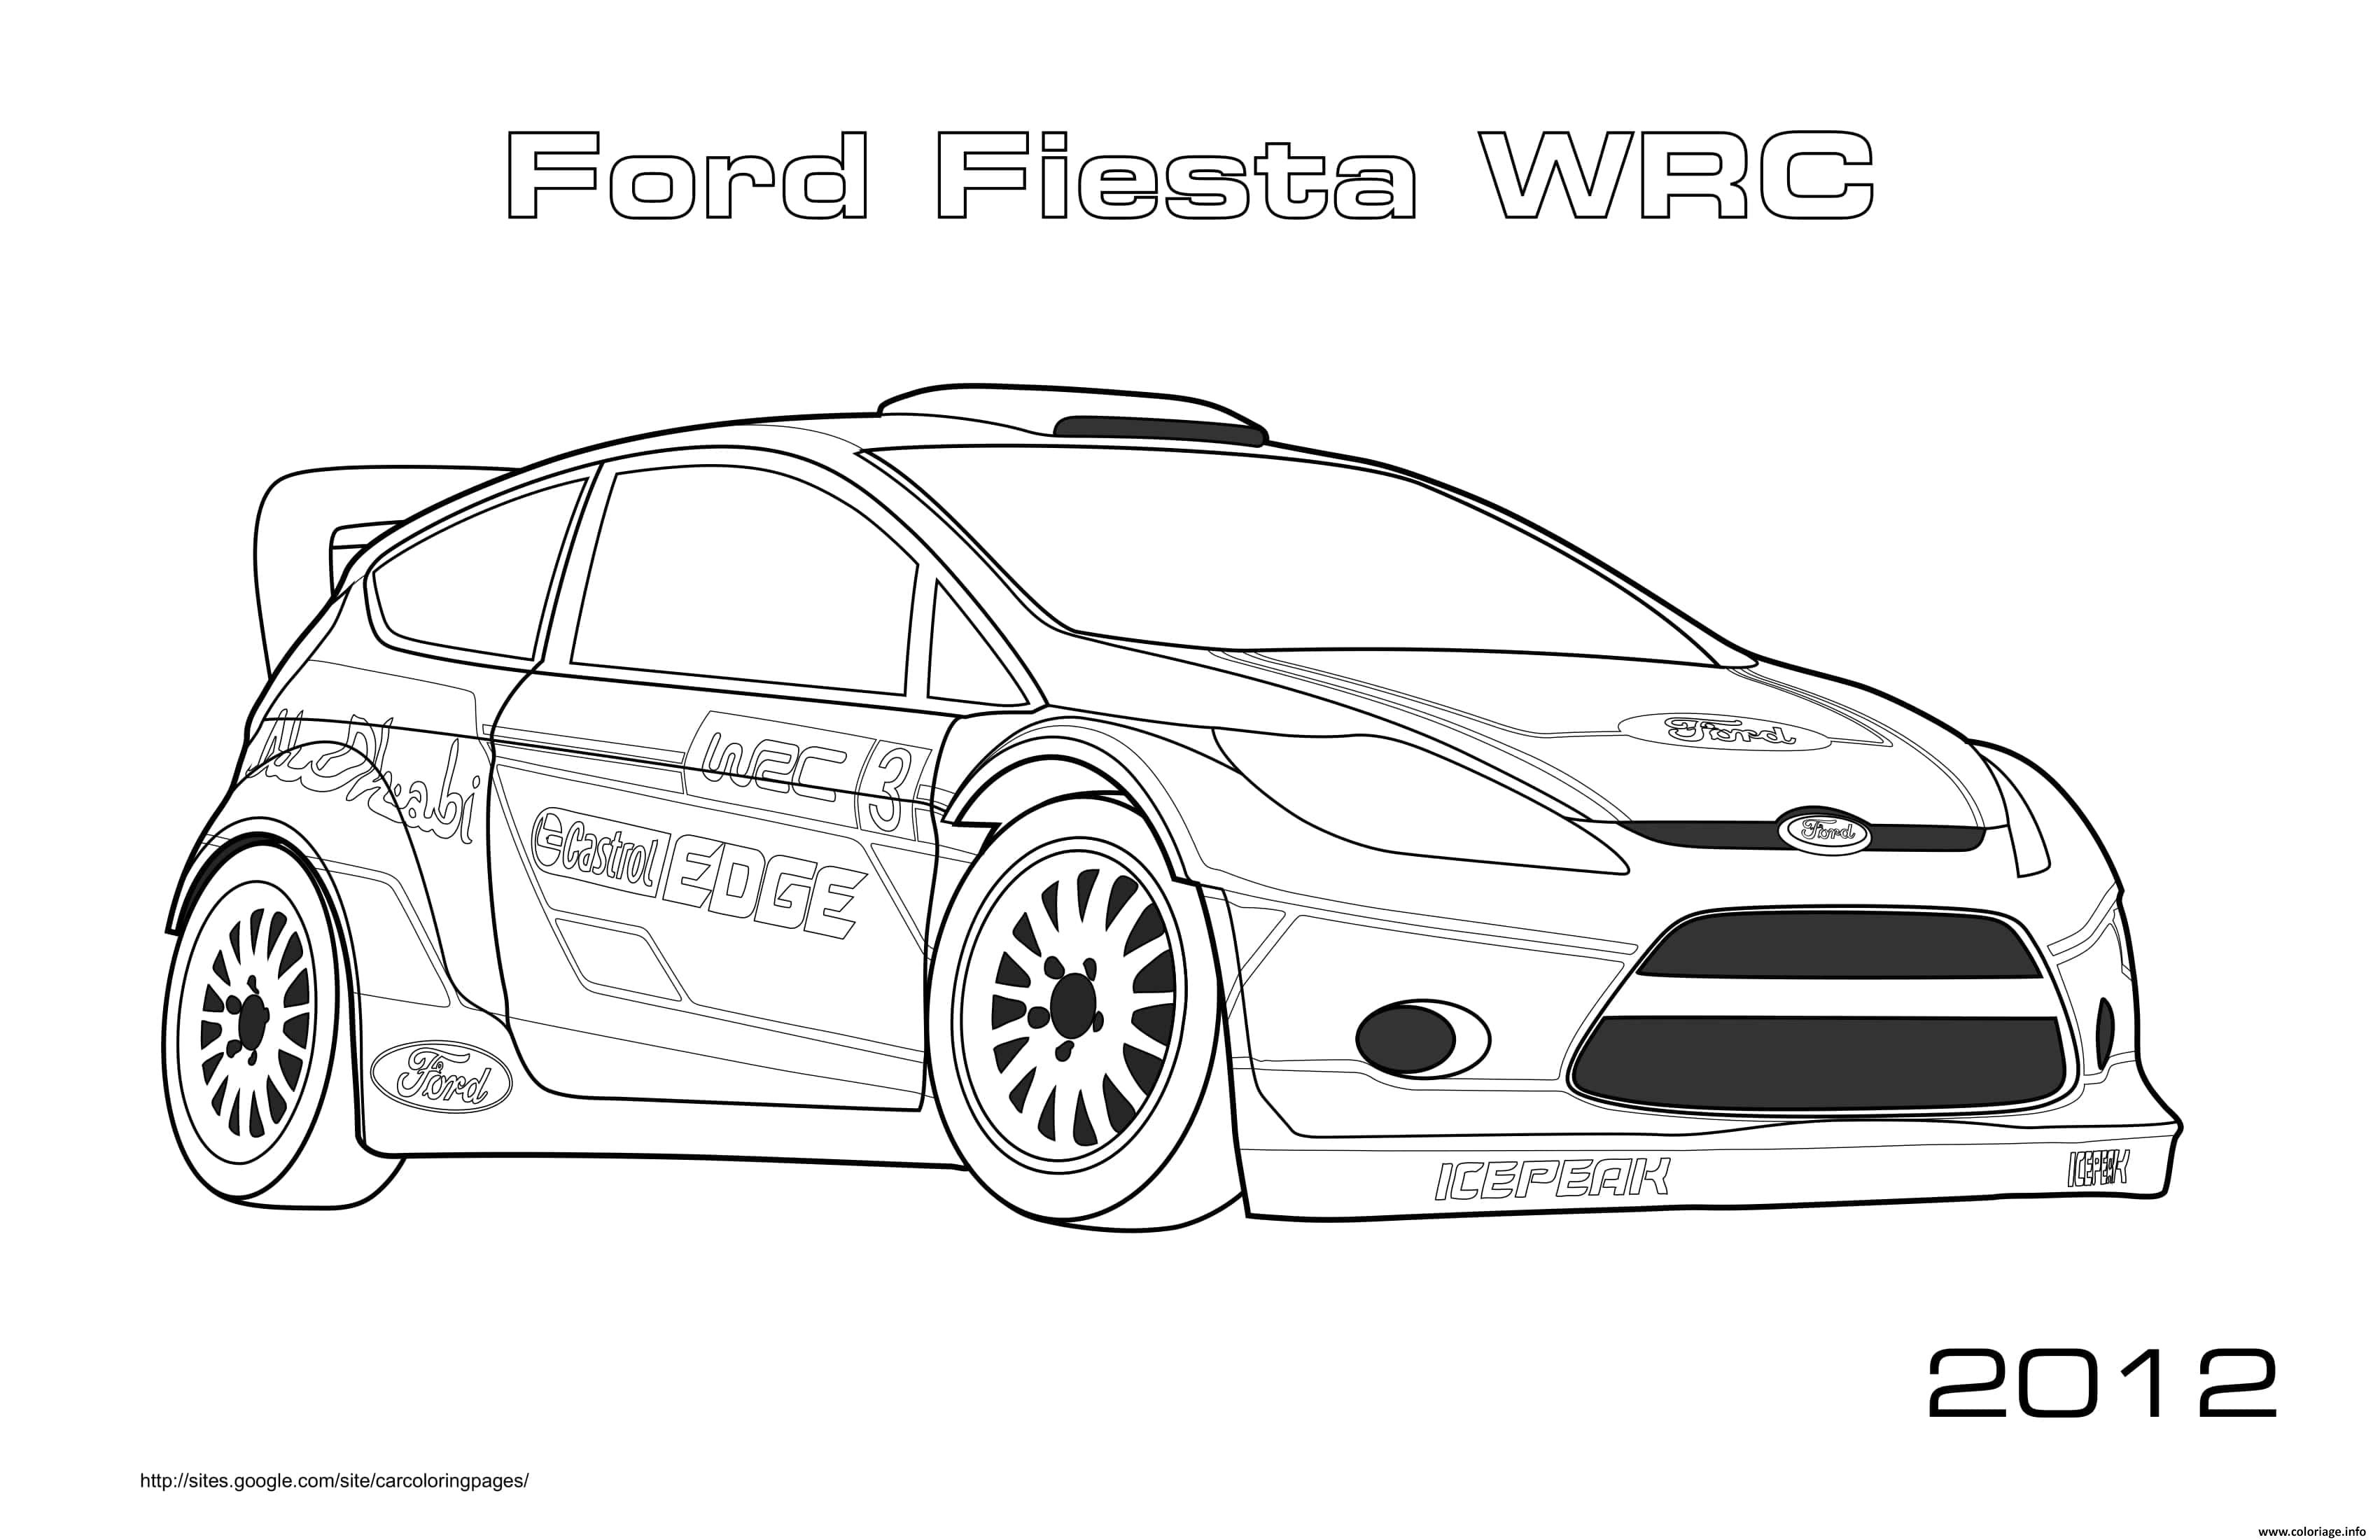 Dessin Ford Fiesta Wrc 2012 Coloriage Gratuit à Imprimer